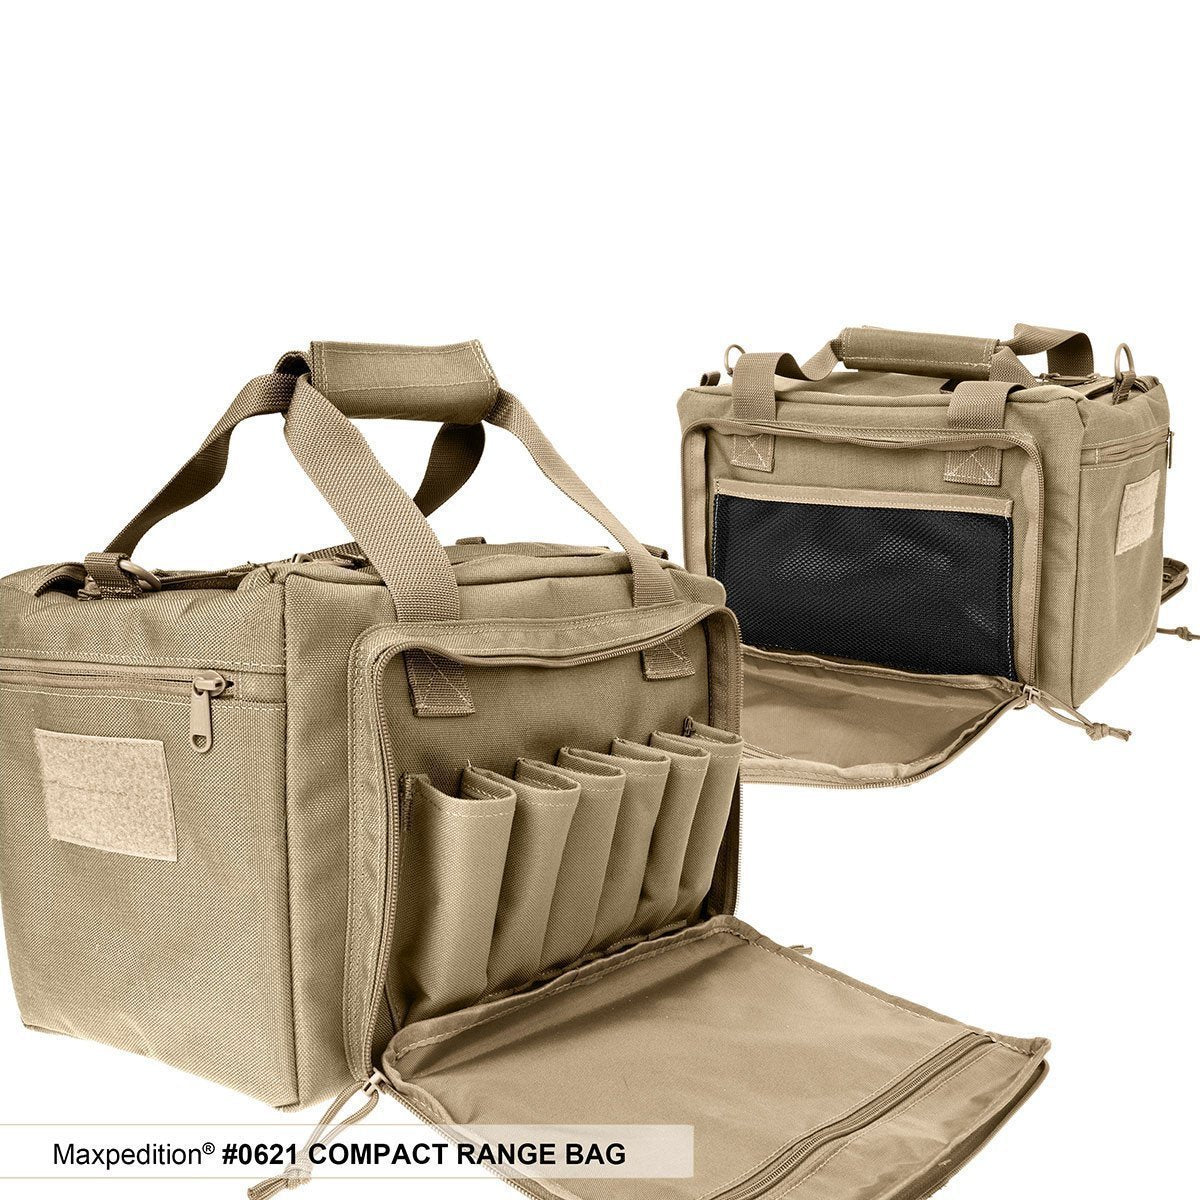 Maxpedition Compact Range Bag Bags, Packs and Cases Maxpedition Tactical Gear Supplier Tactical Distributors Australia